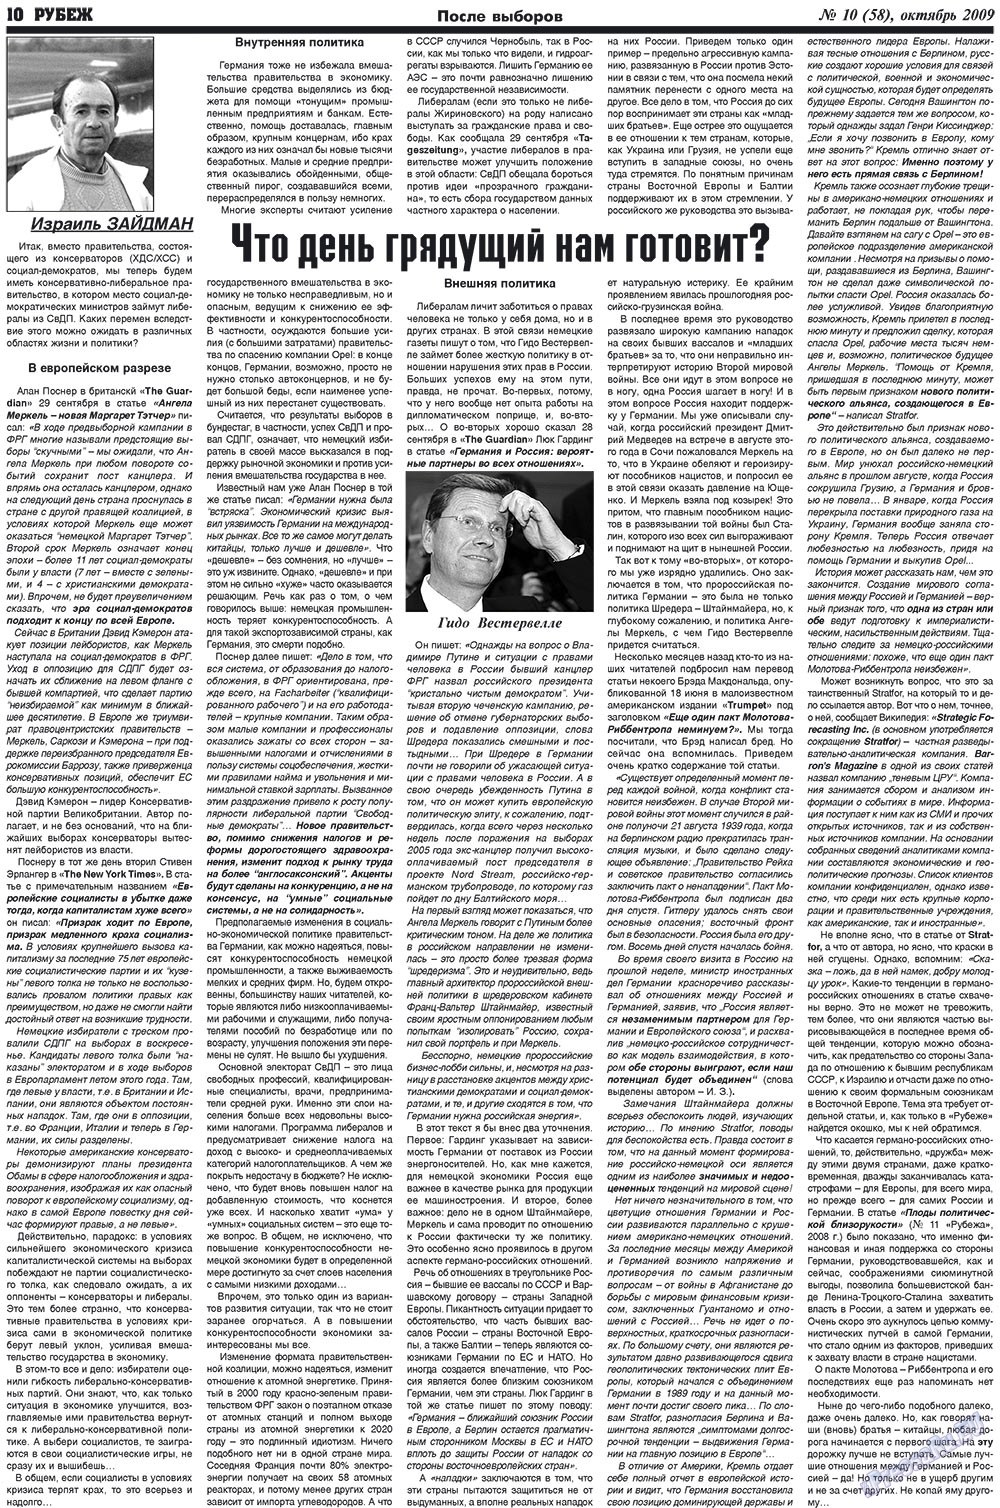 Рубеж, газета. 2009 №10 стр.10